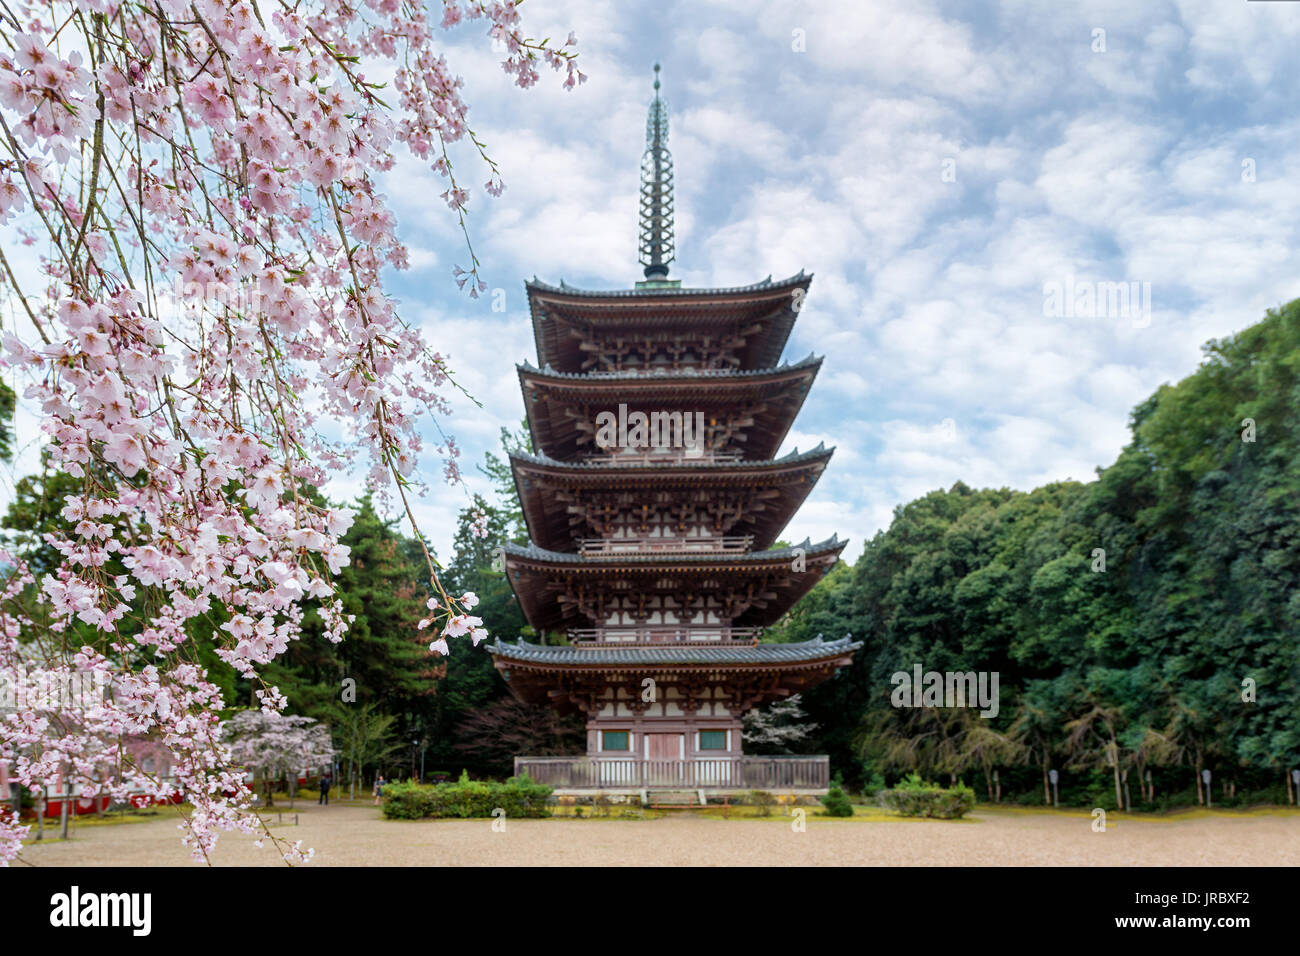 Five Storied Pagoda with Japan cherry blossom in Daigoji Temple in Fushimi Ward, Kyoto City, Japan. Cherry blossom season in Kyoto, Japan Stock Photo